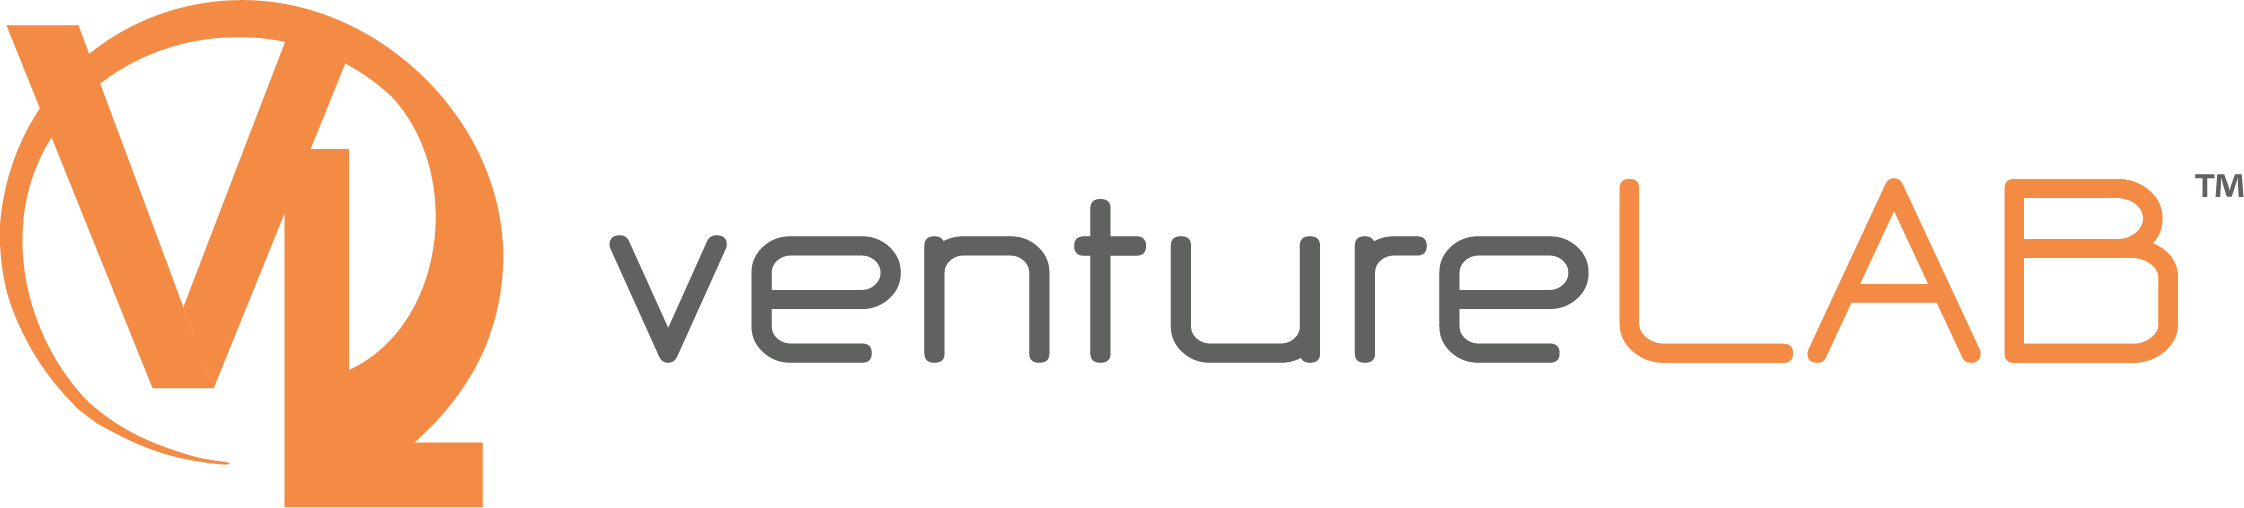 VentureLAB logo